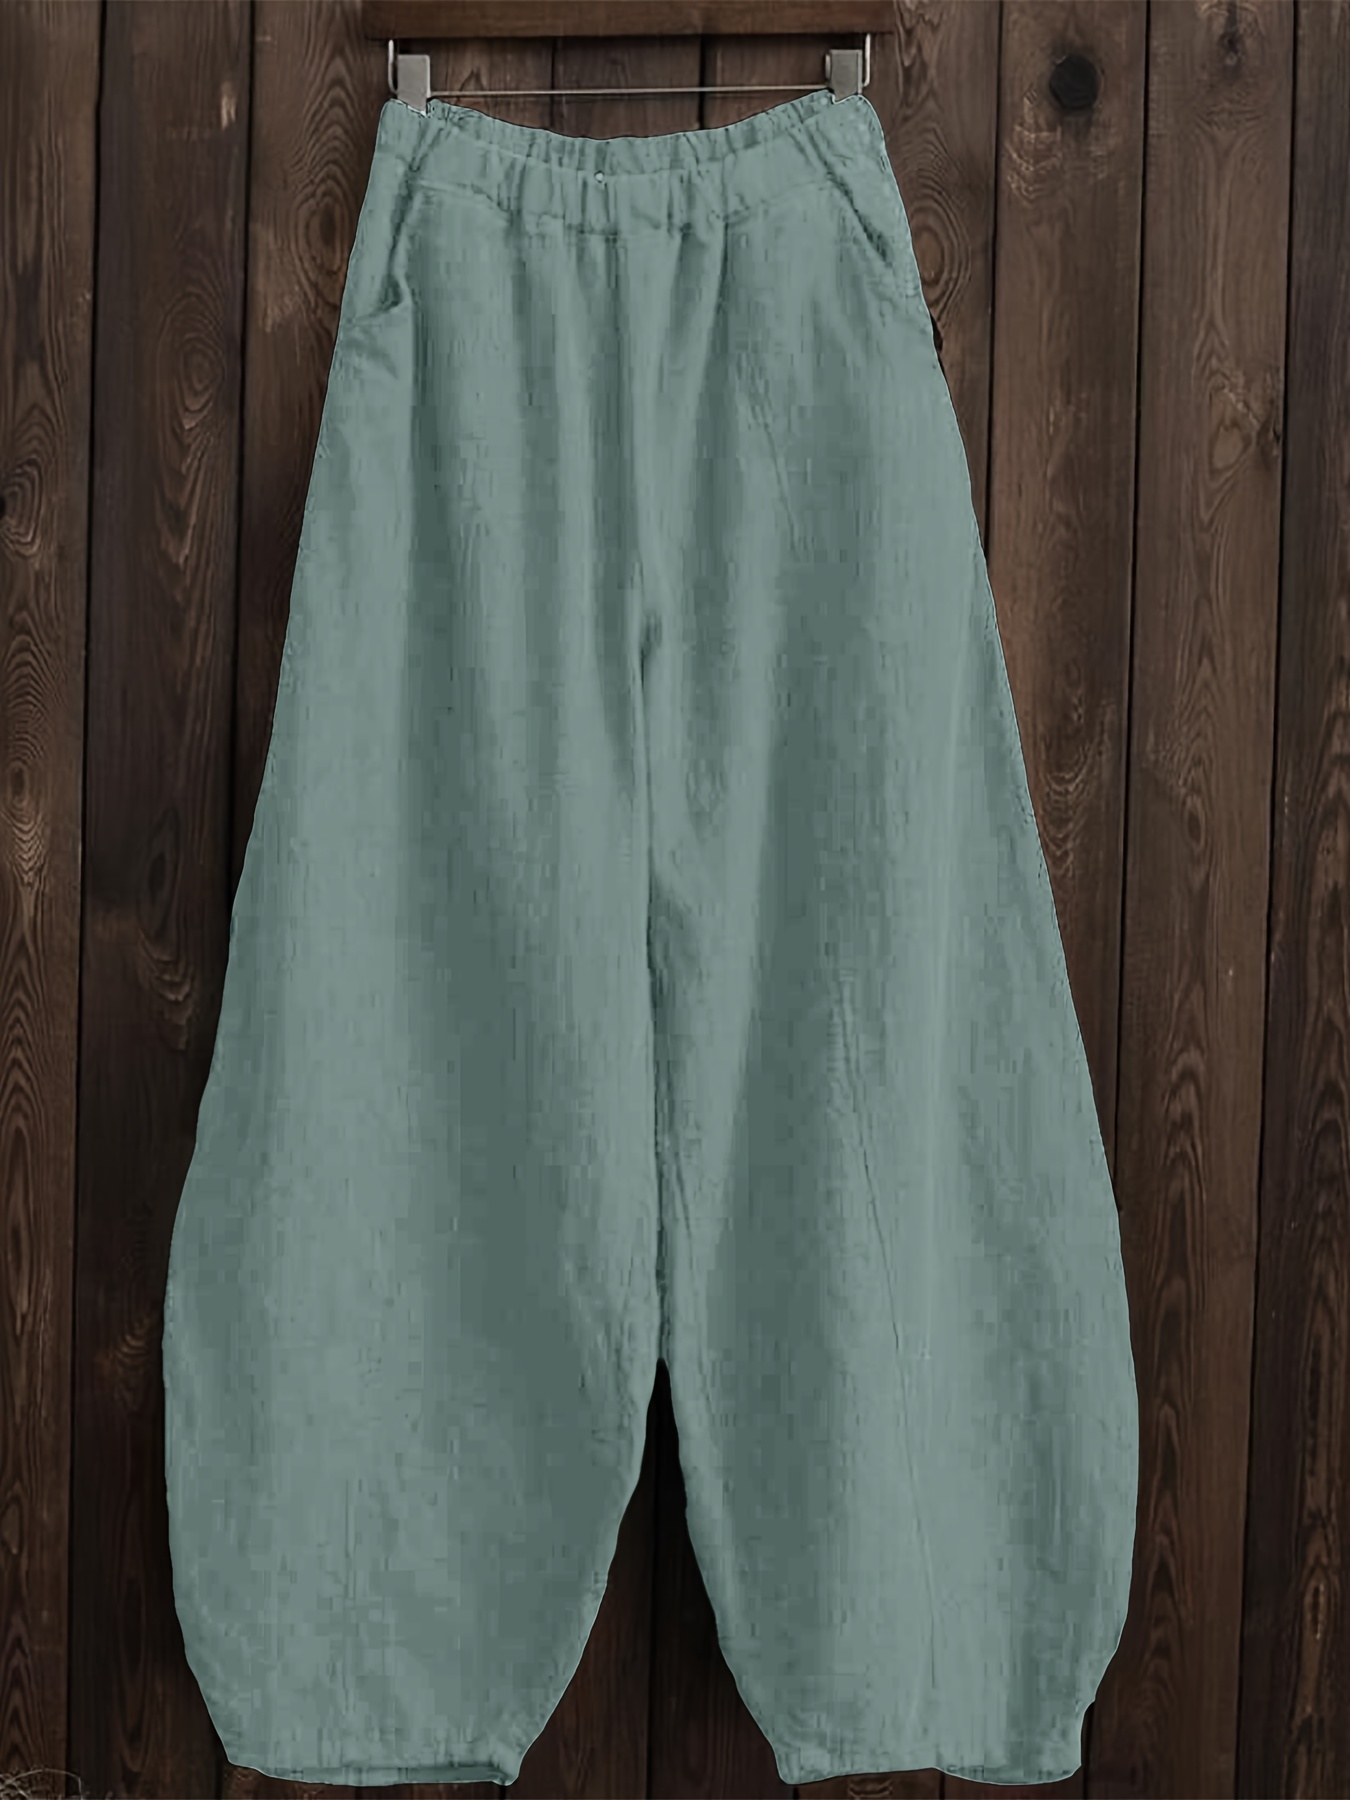 Women's Casual Cotton Linen Lantern Pants Baggy Elastic Waist